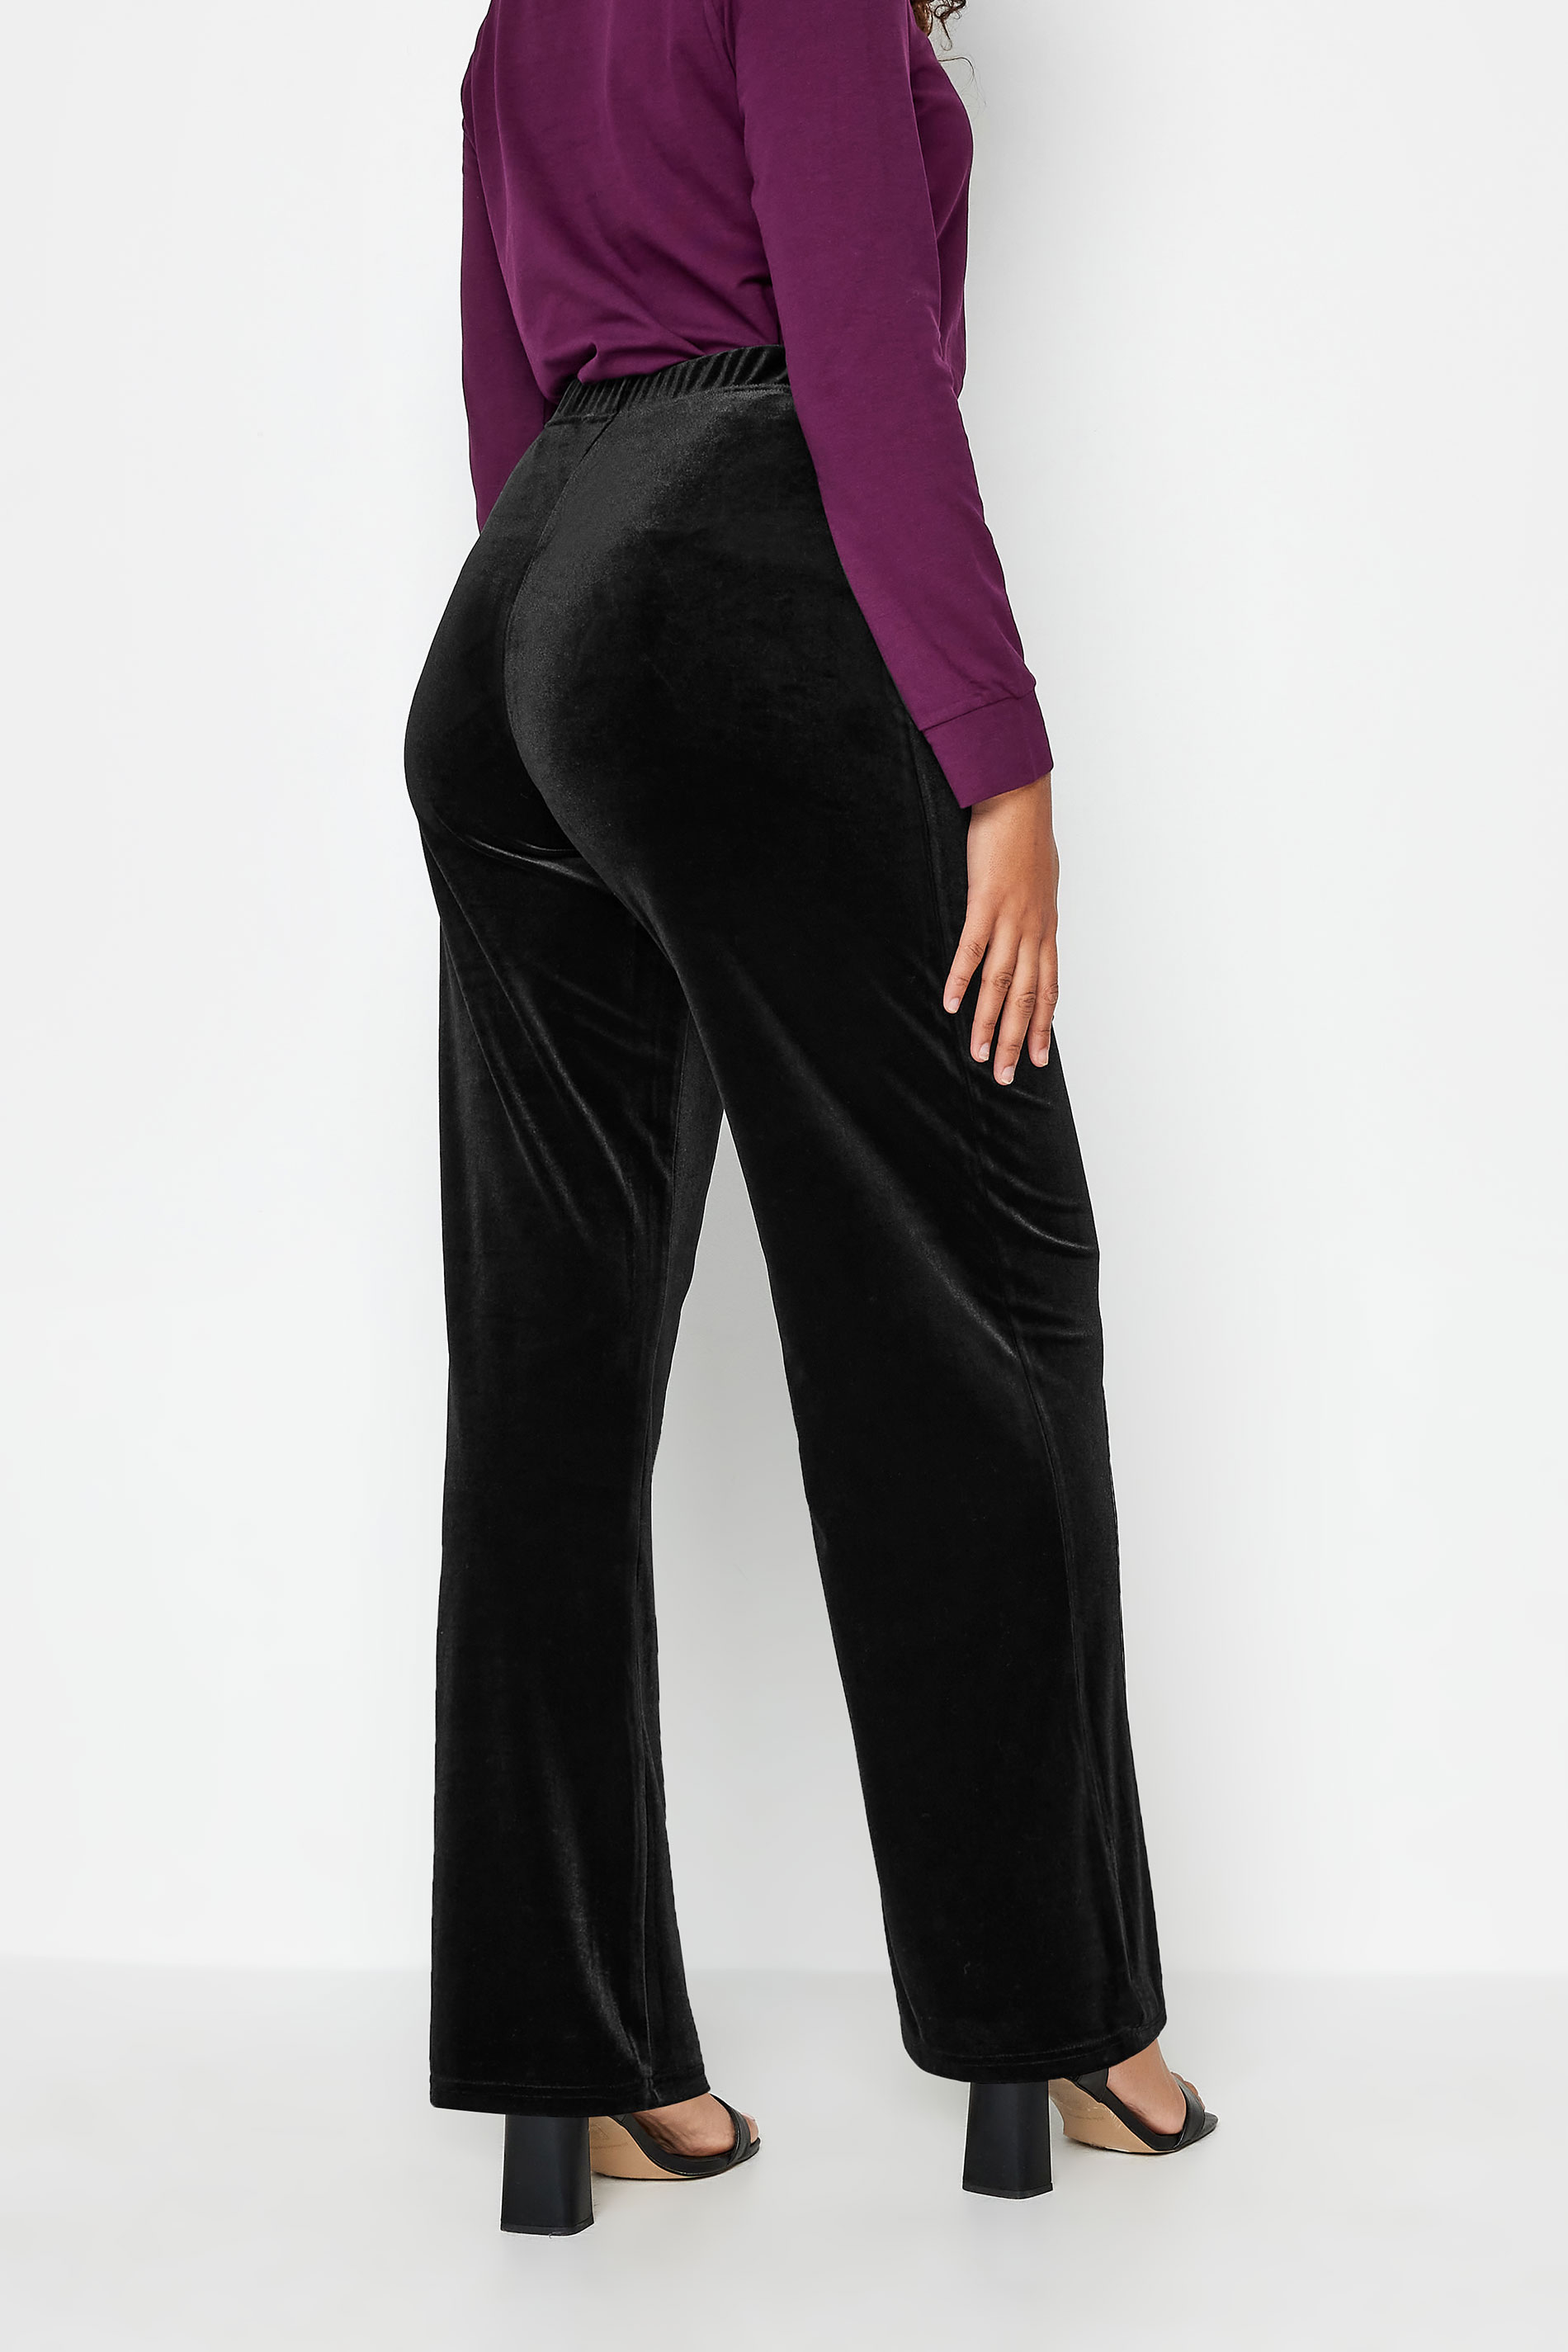 Purple Velvet Pants Womens | Velvet Trousers Streetwear | Harajuku Trouser  Purple - Pants & Capris - Aliexpress